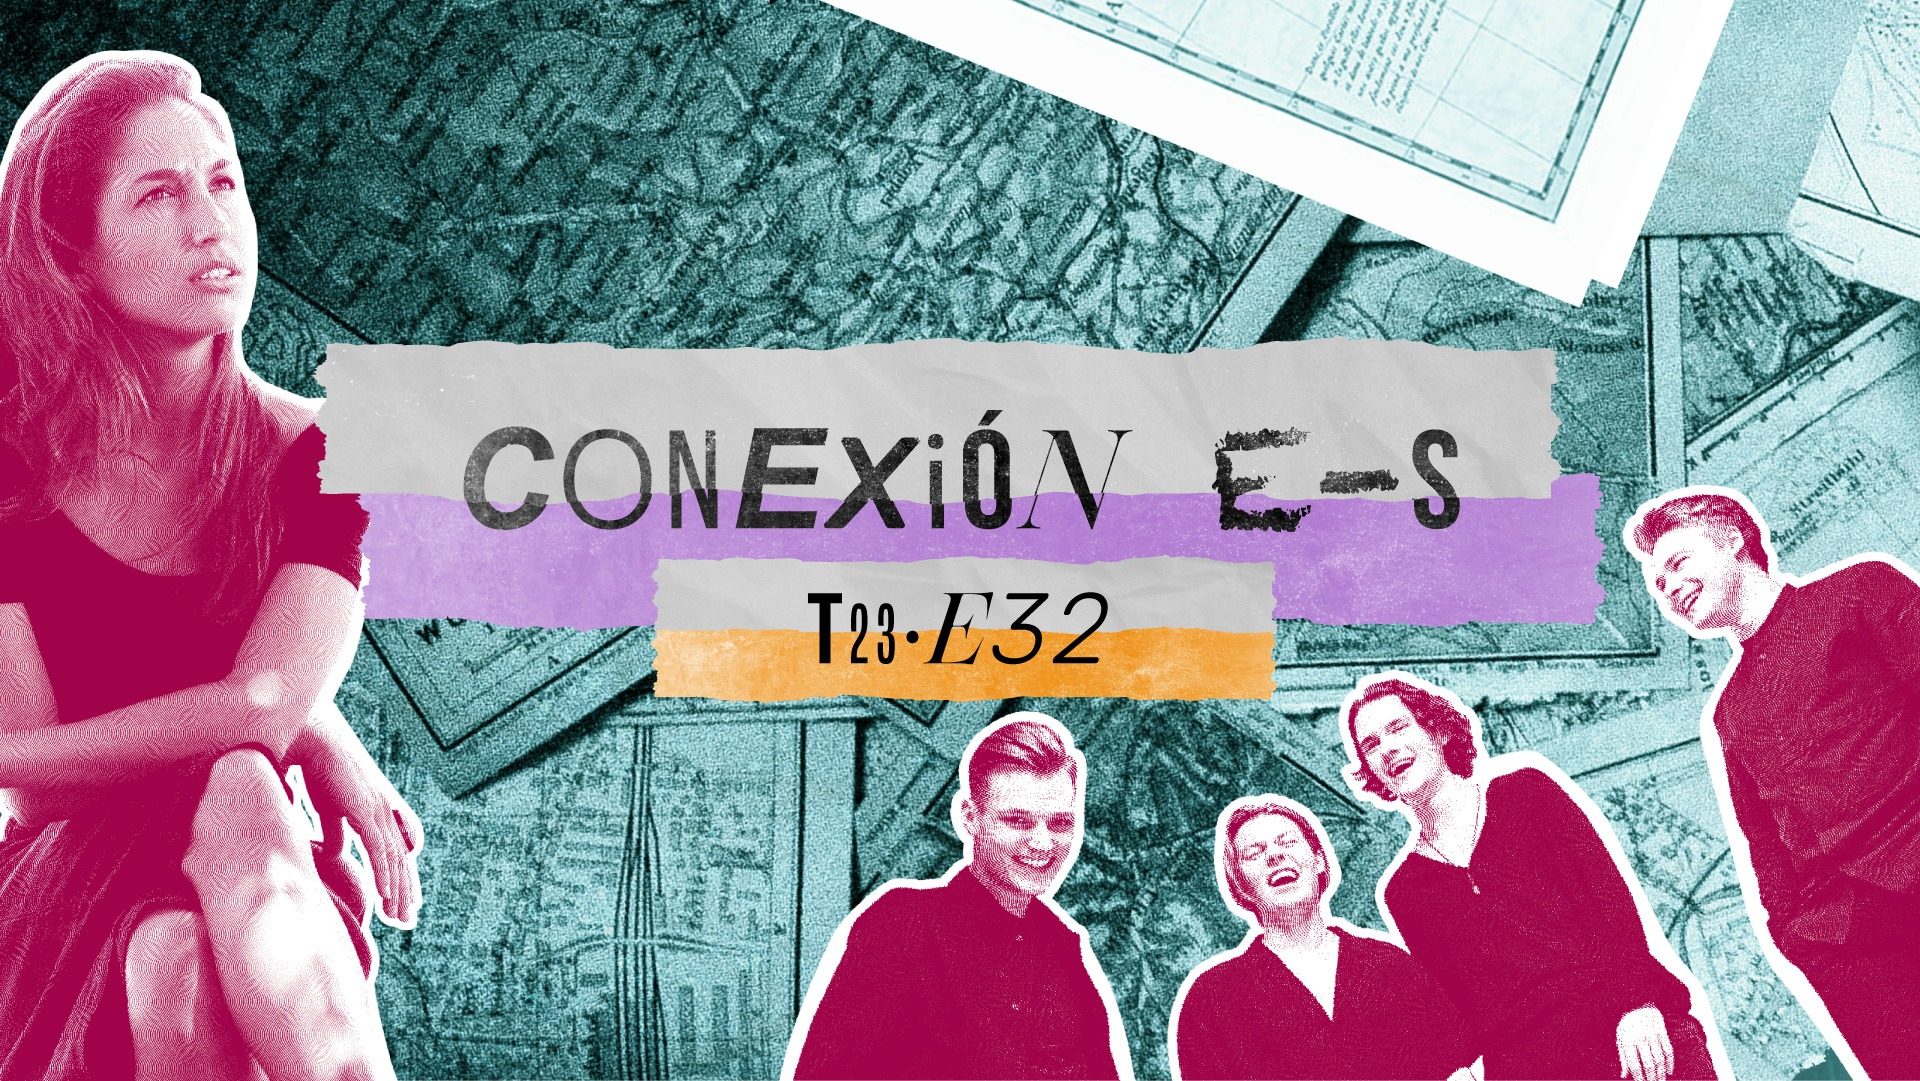 CONEXION ES T23E32